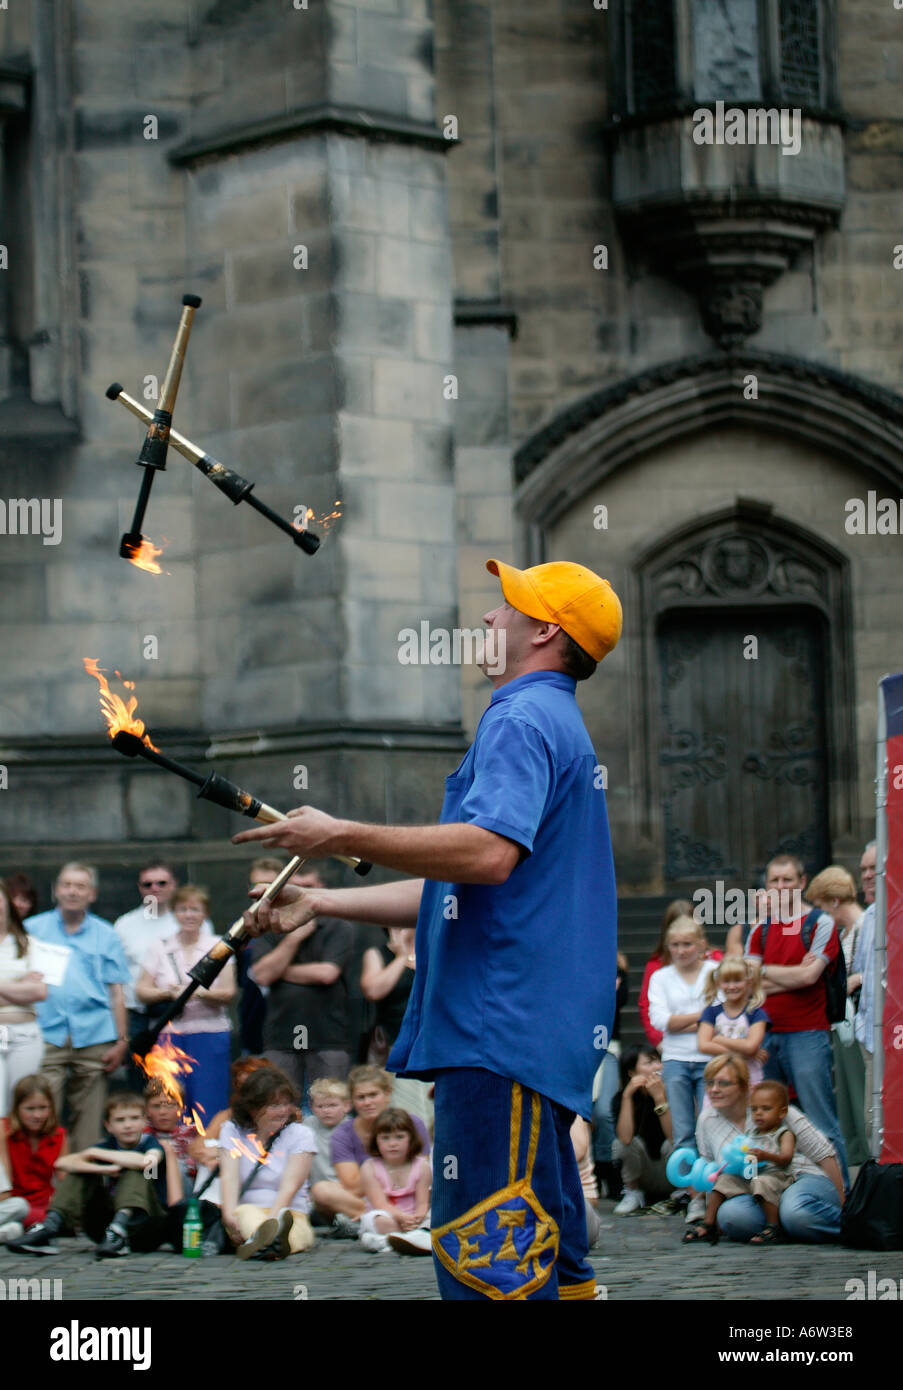 Street Performer juggling fire torches at the Edinburgh Fringe Festival Scotland UK Stock Photo